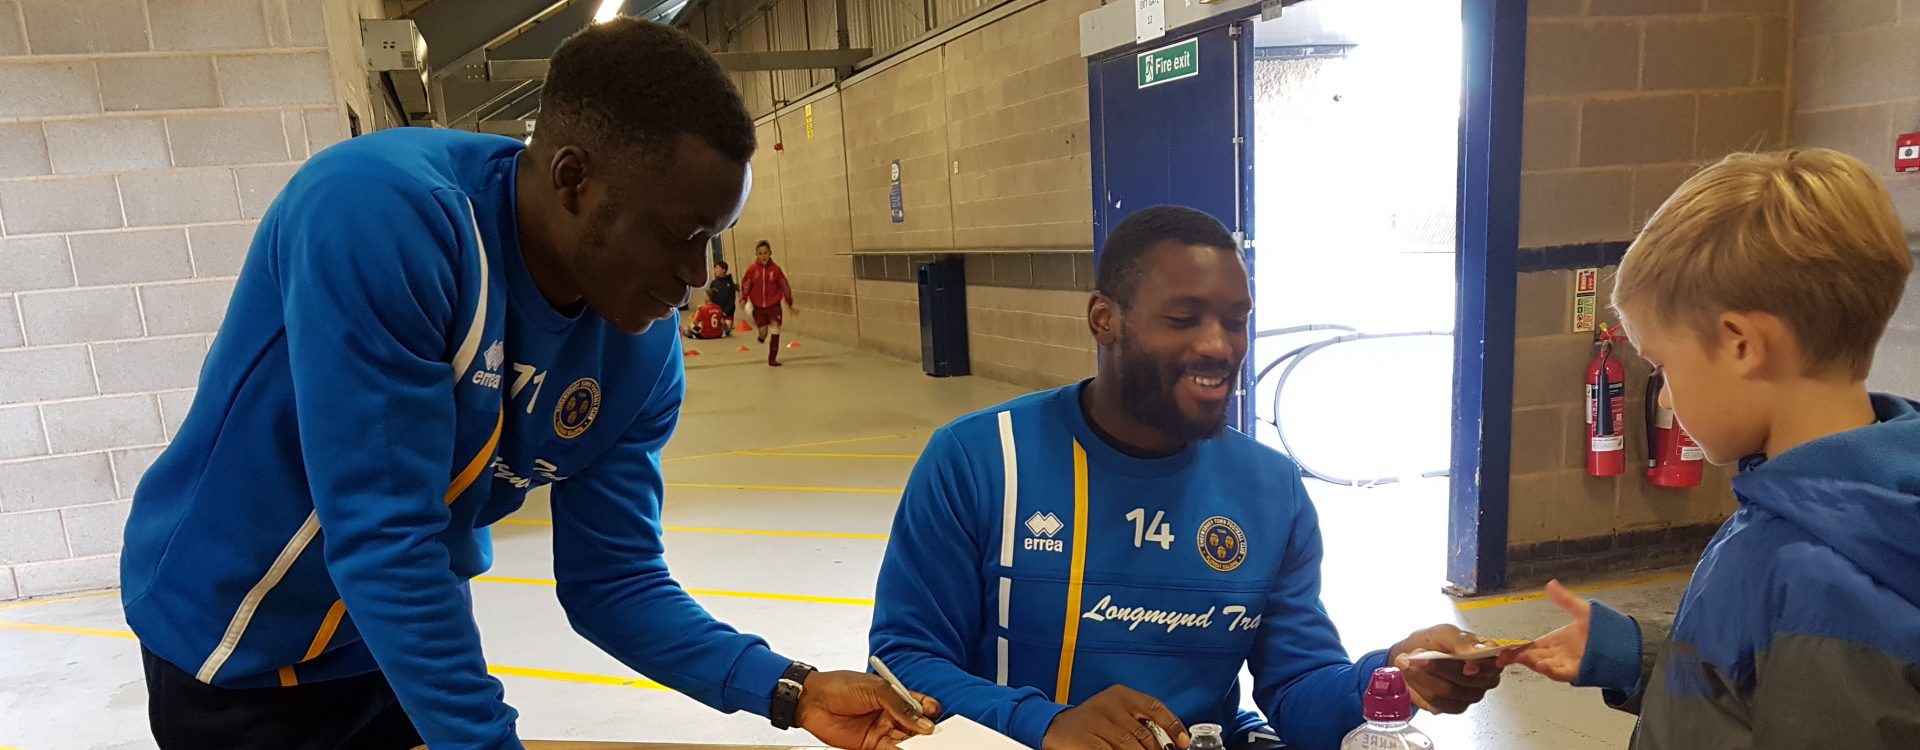 Shrewsbury Town players sign autographs